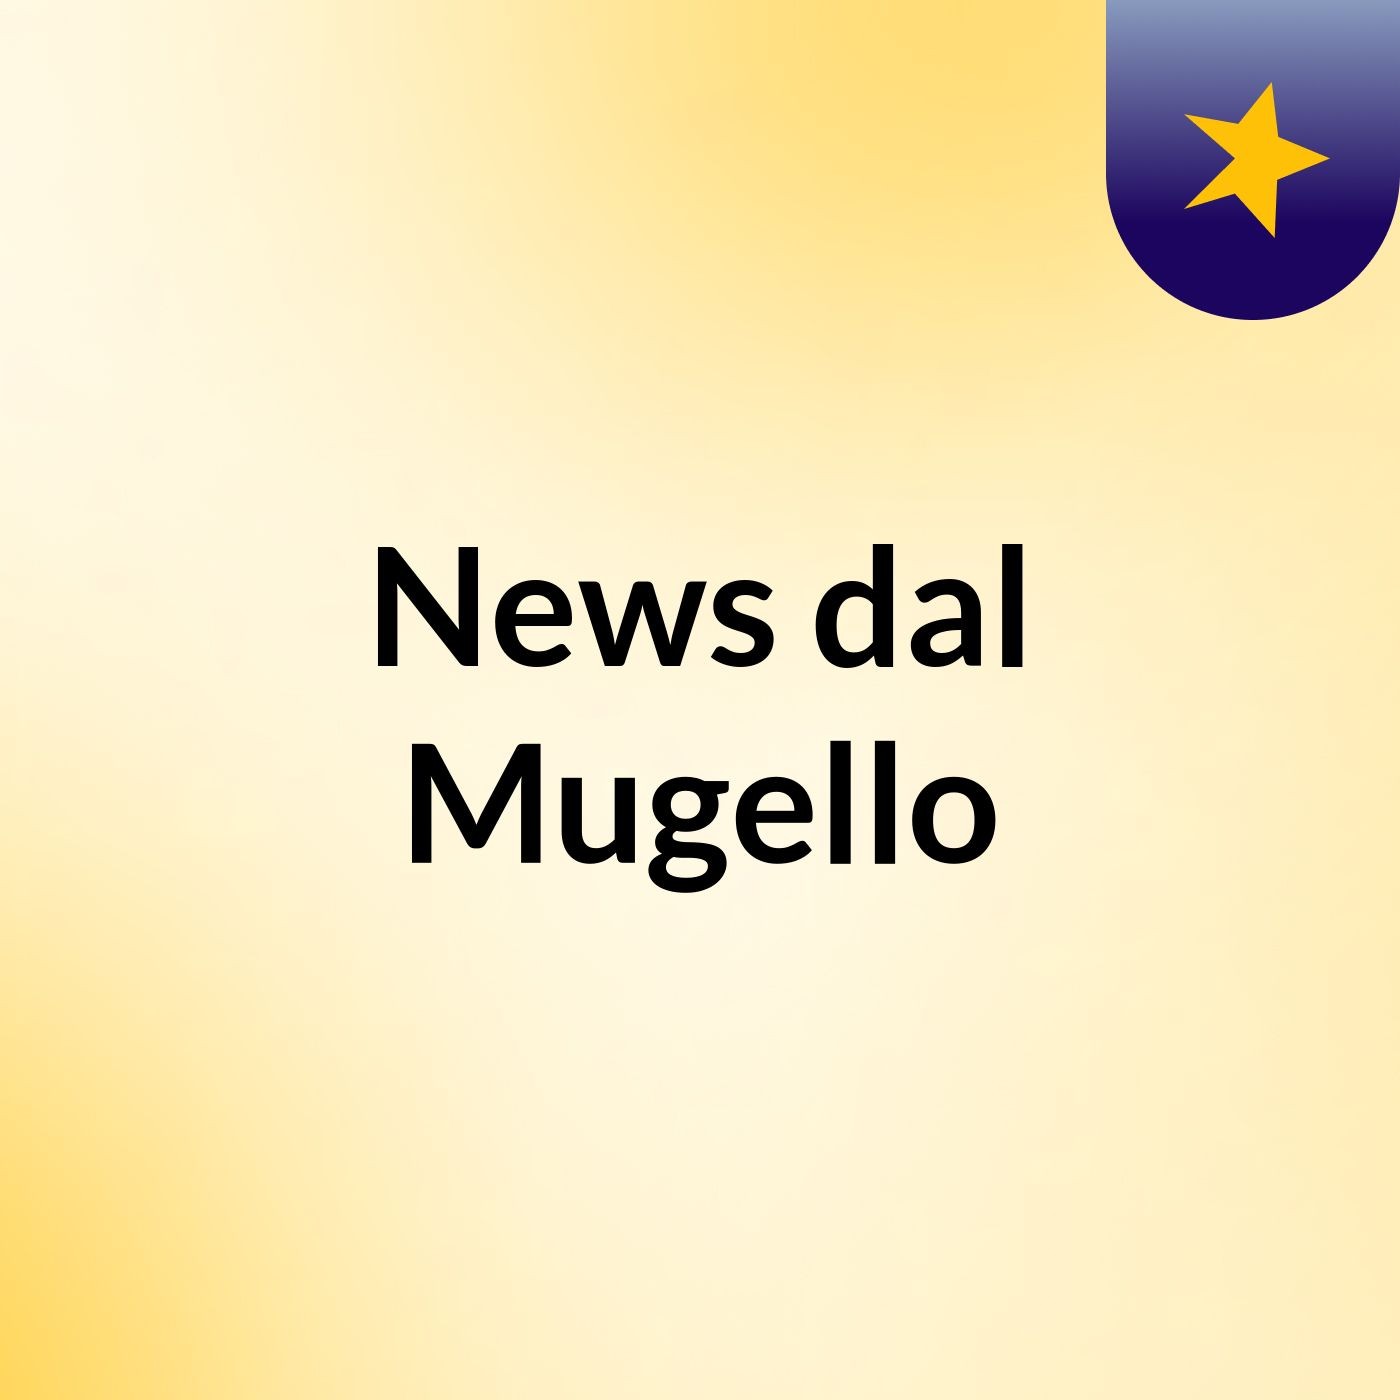 News dal Mugello